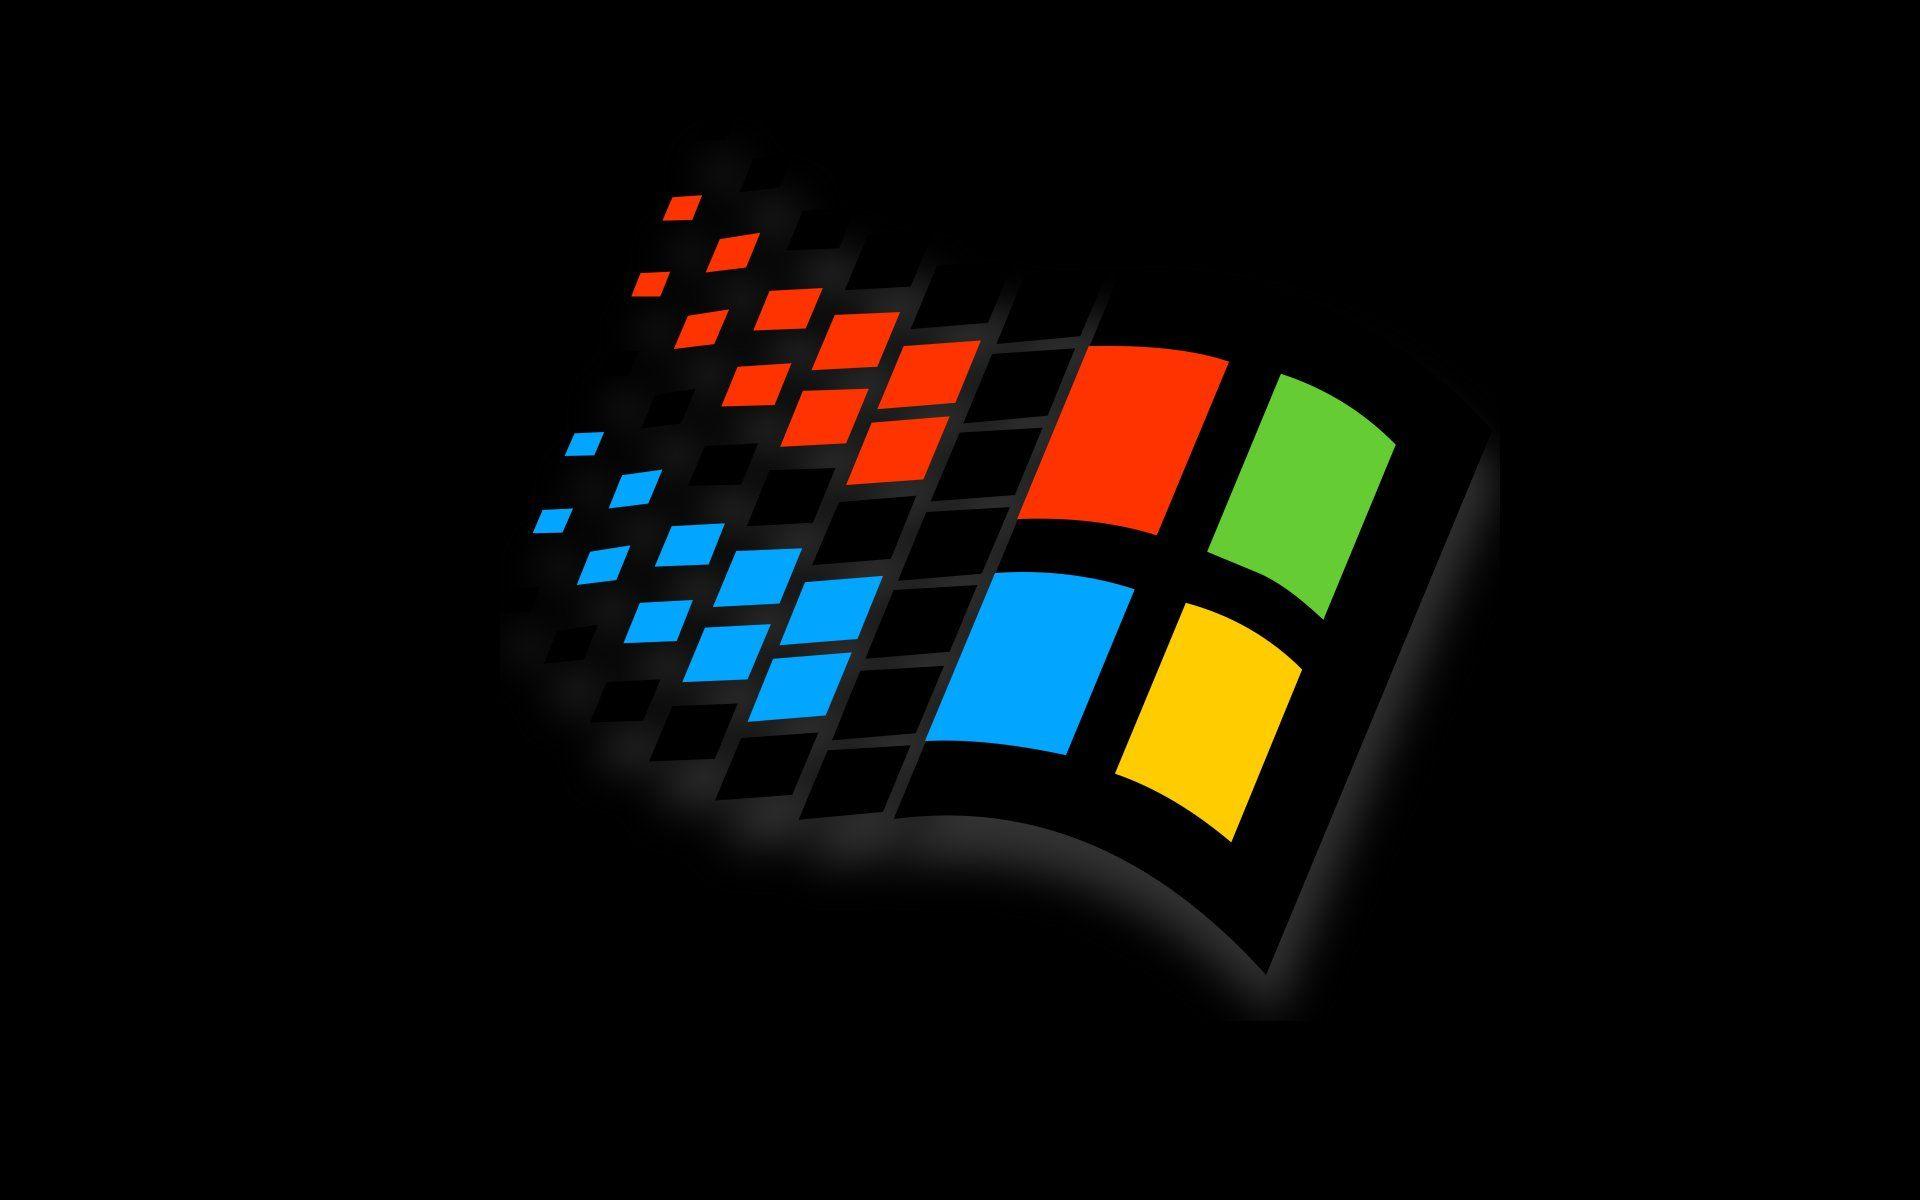 Installing Windows 98. Liberate Te Ex Inferis